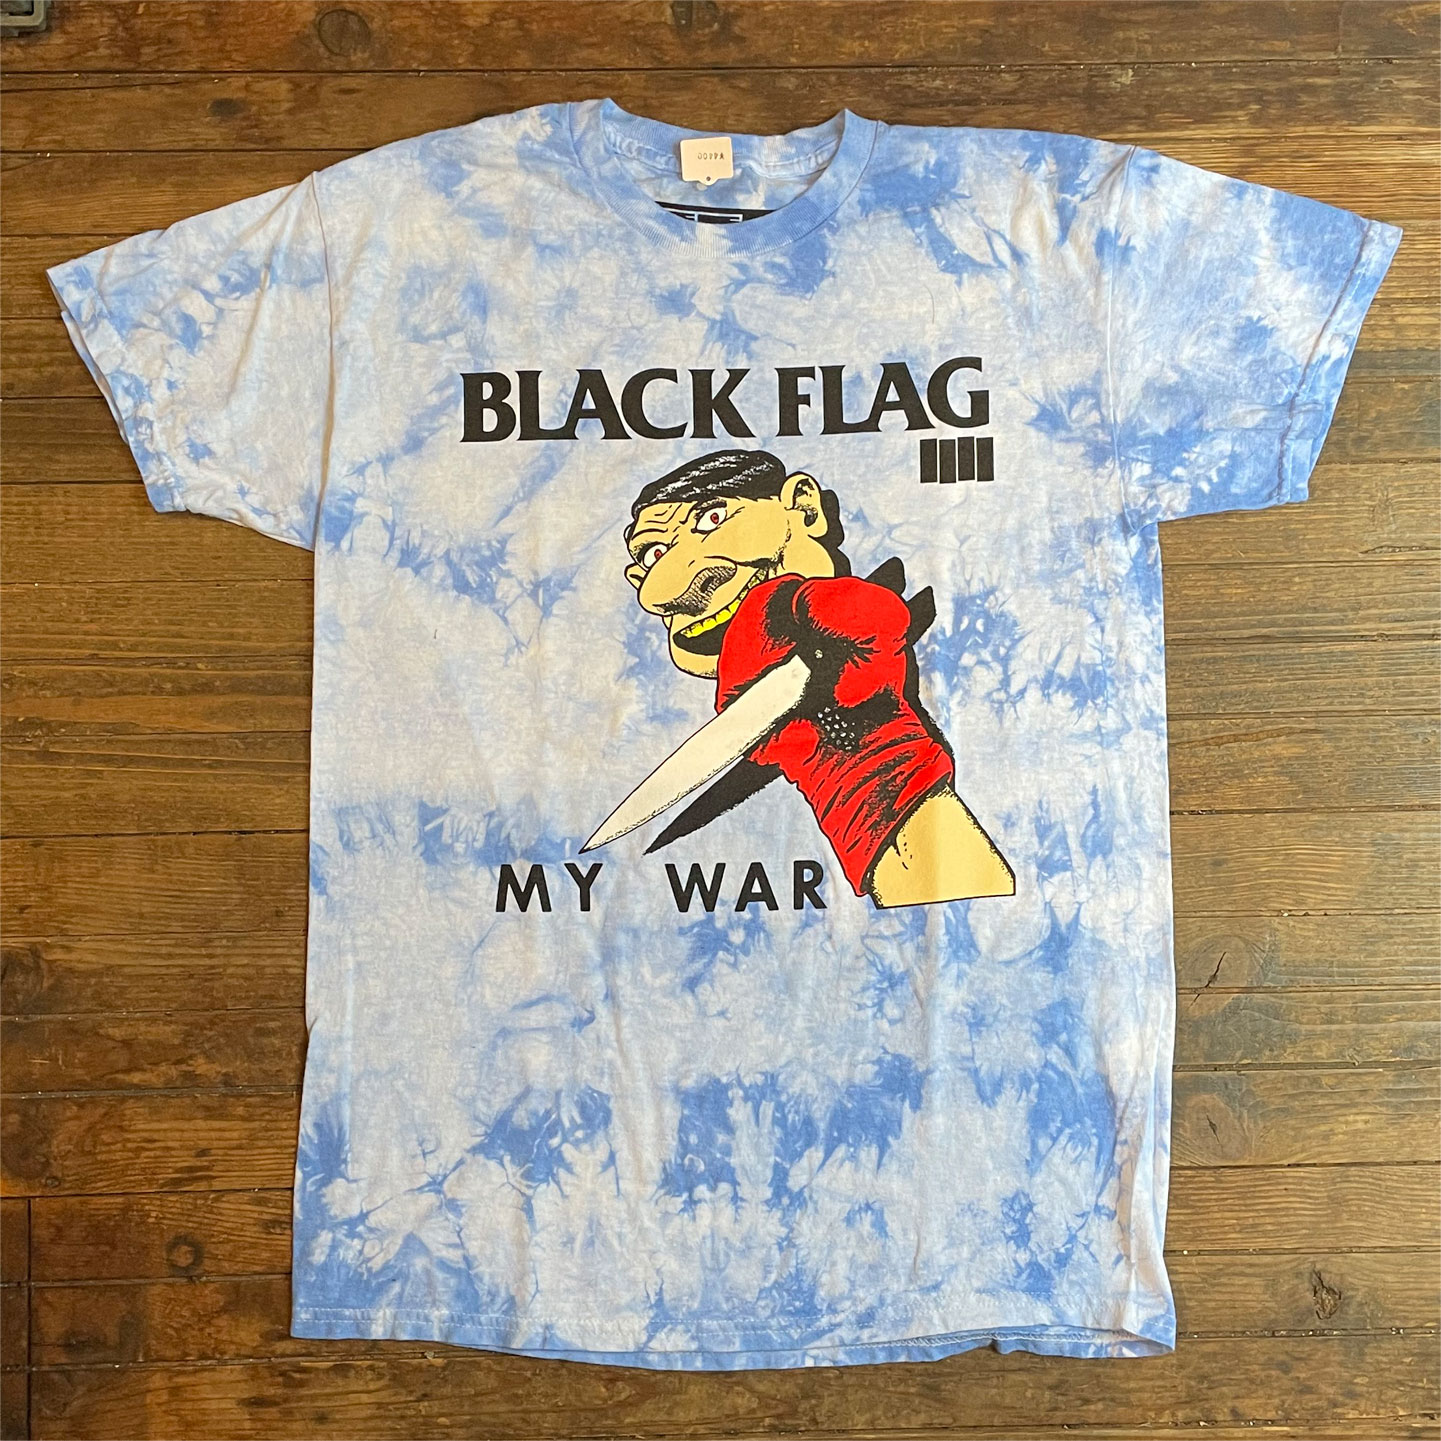 BLACK FLAG Tシャツ TIE-DYE MY WAR Ltd!!!